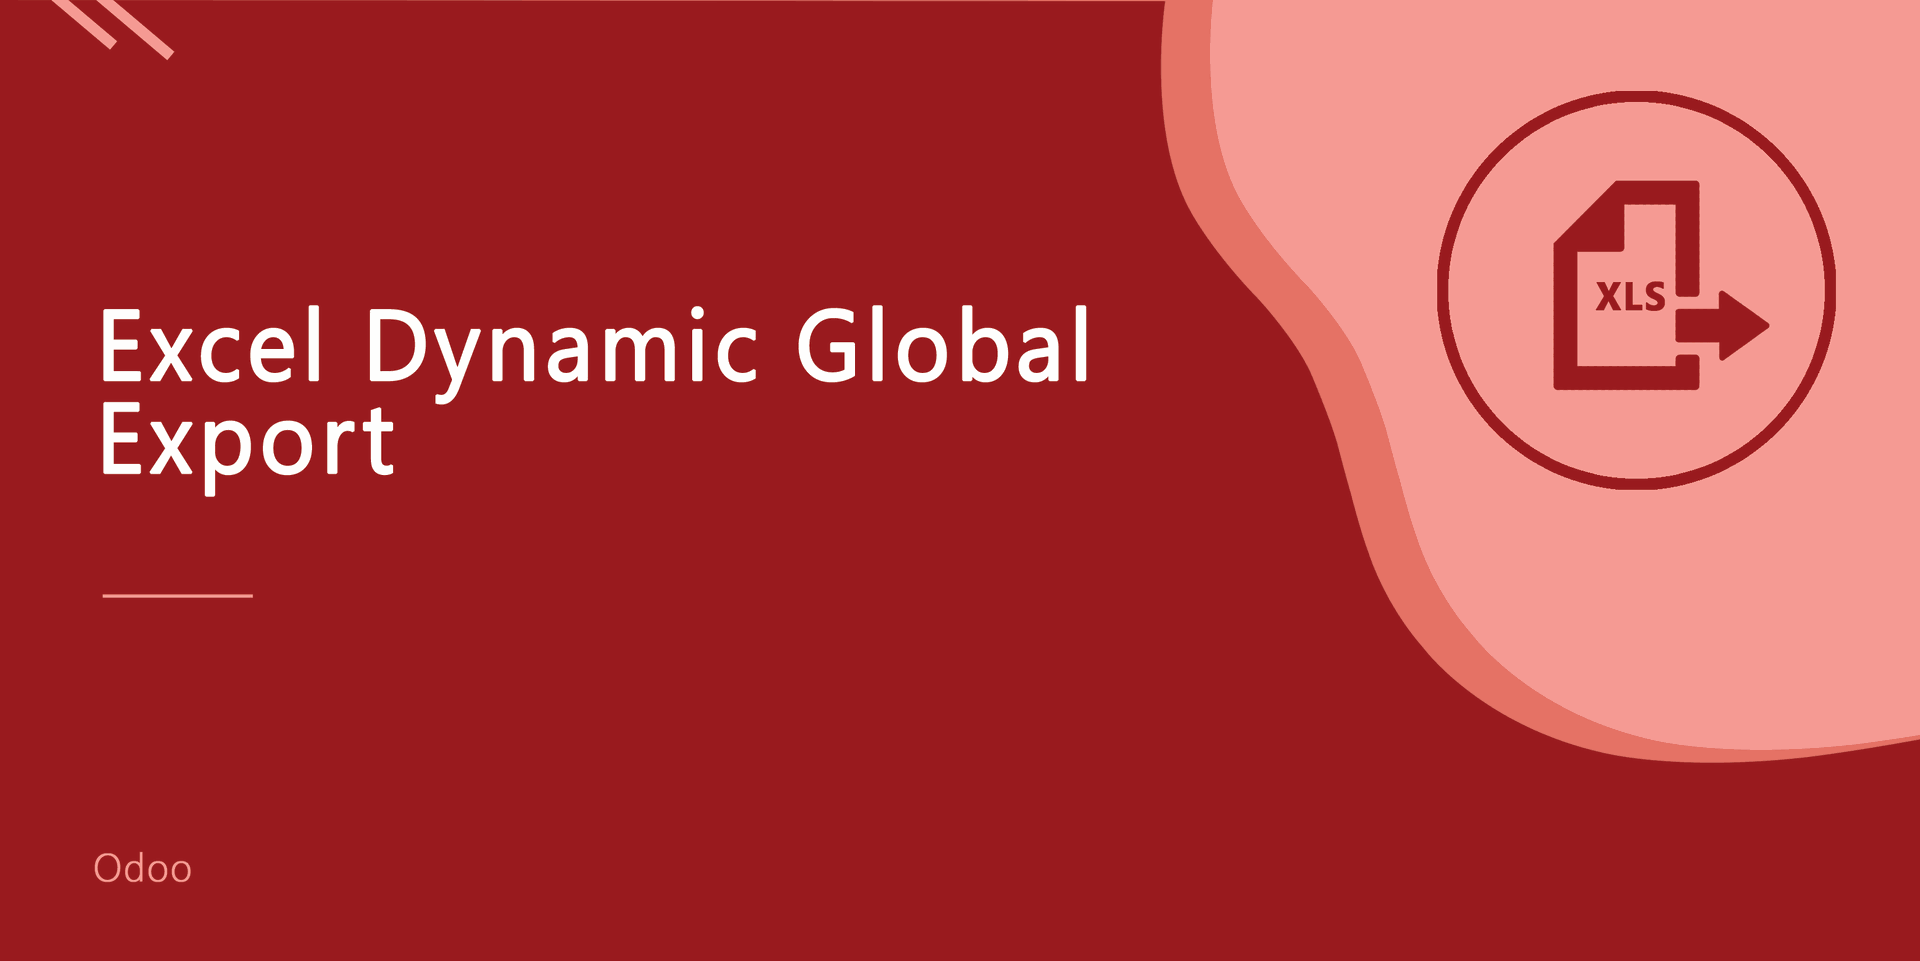 Excel Dynamic Global Export